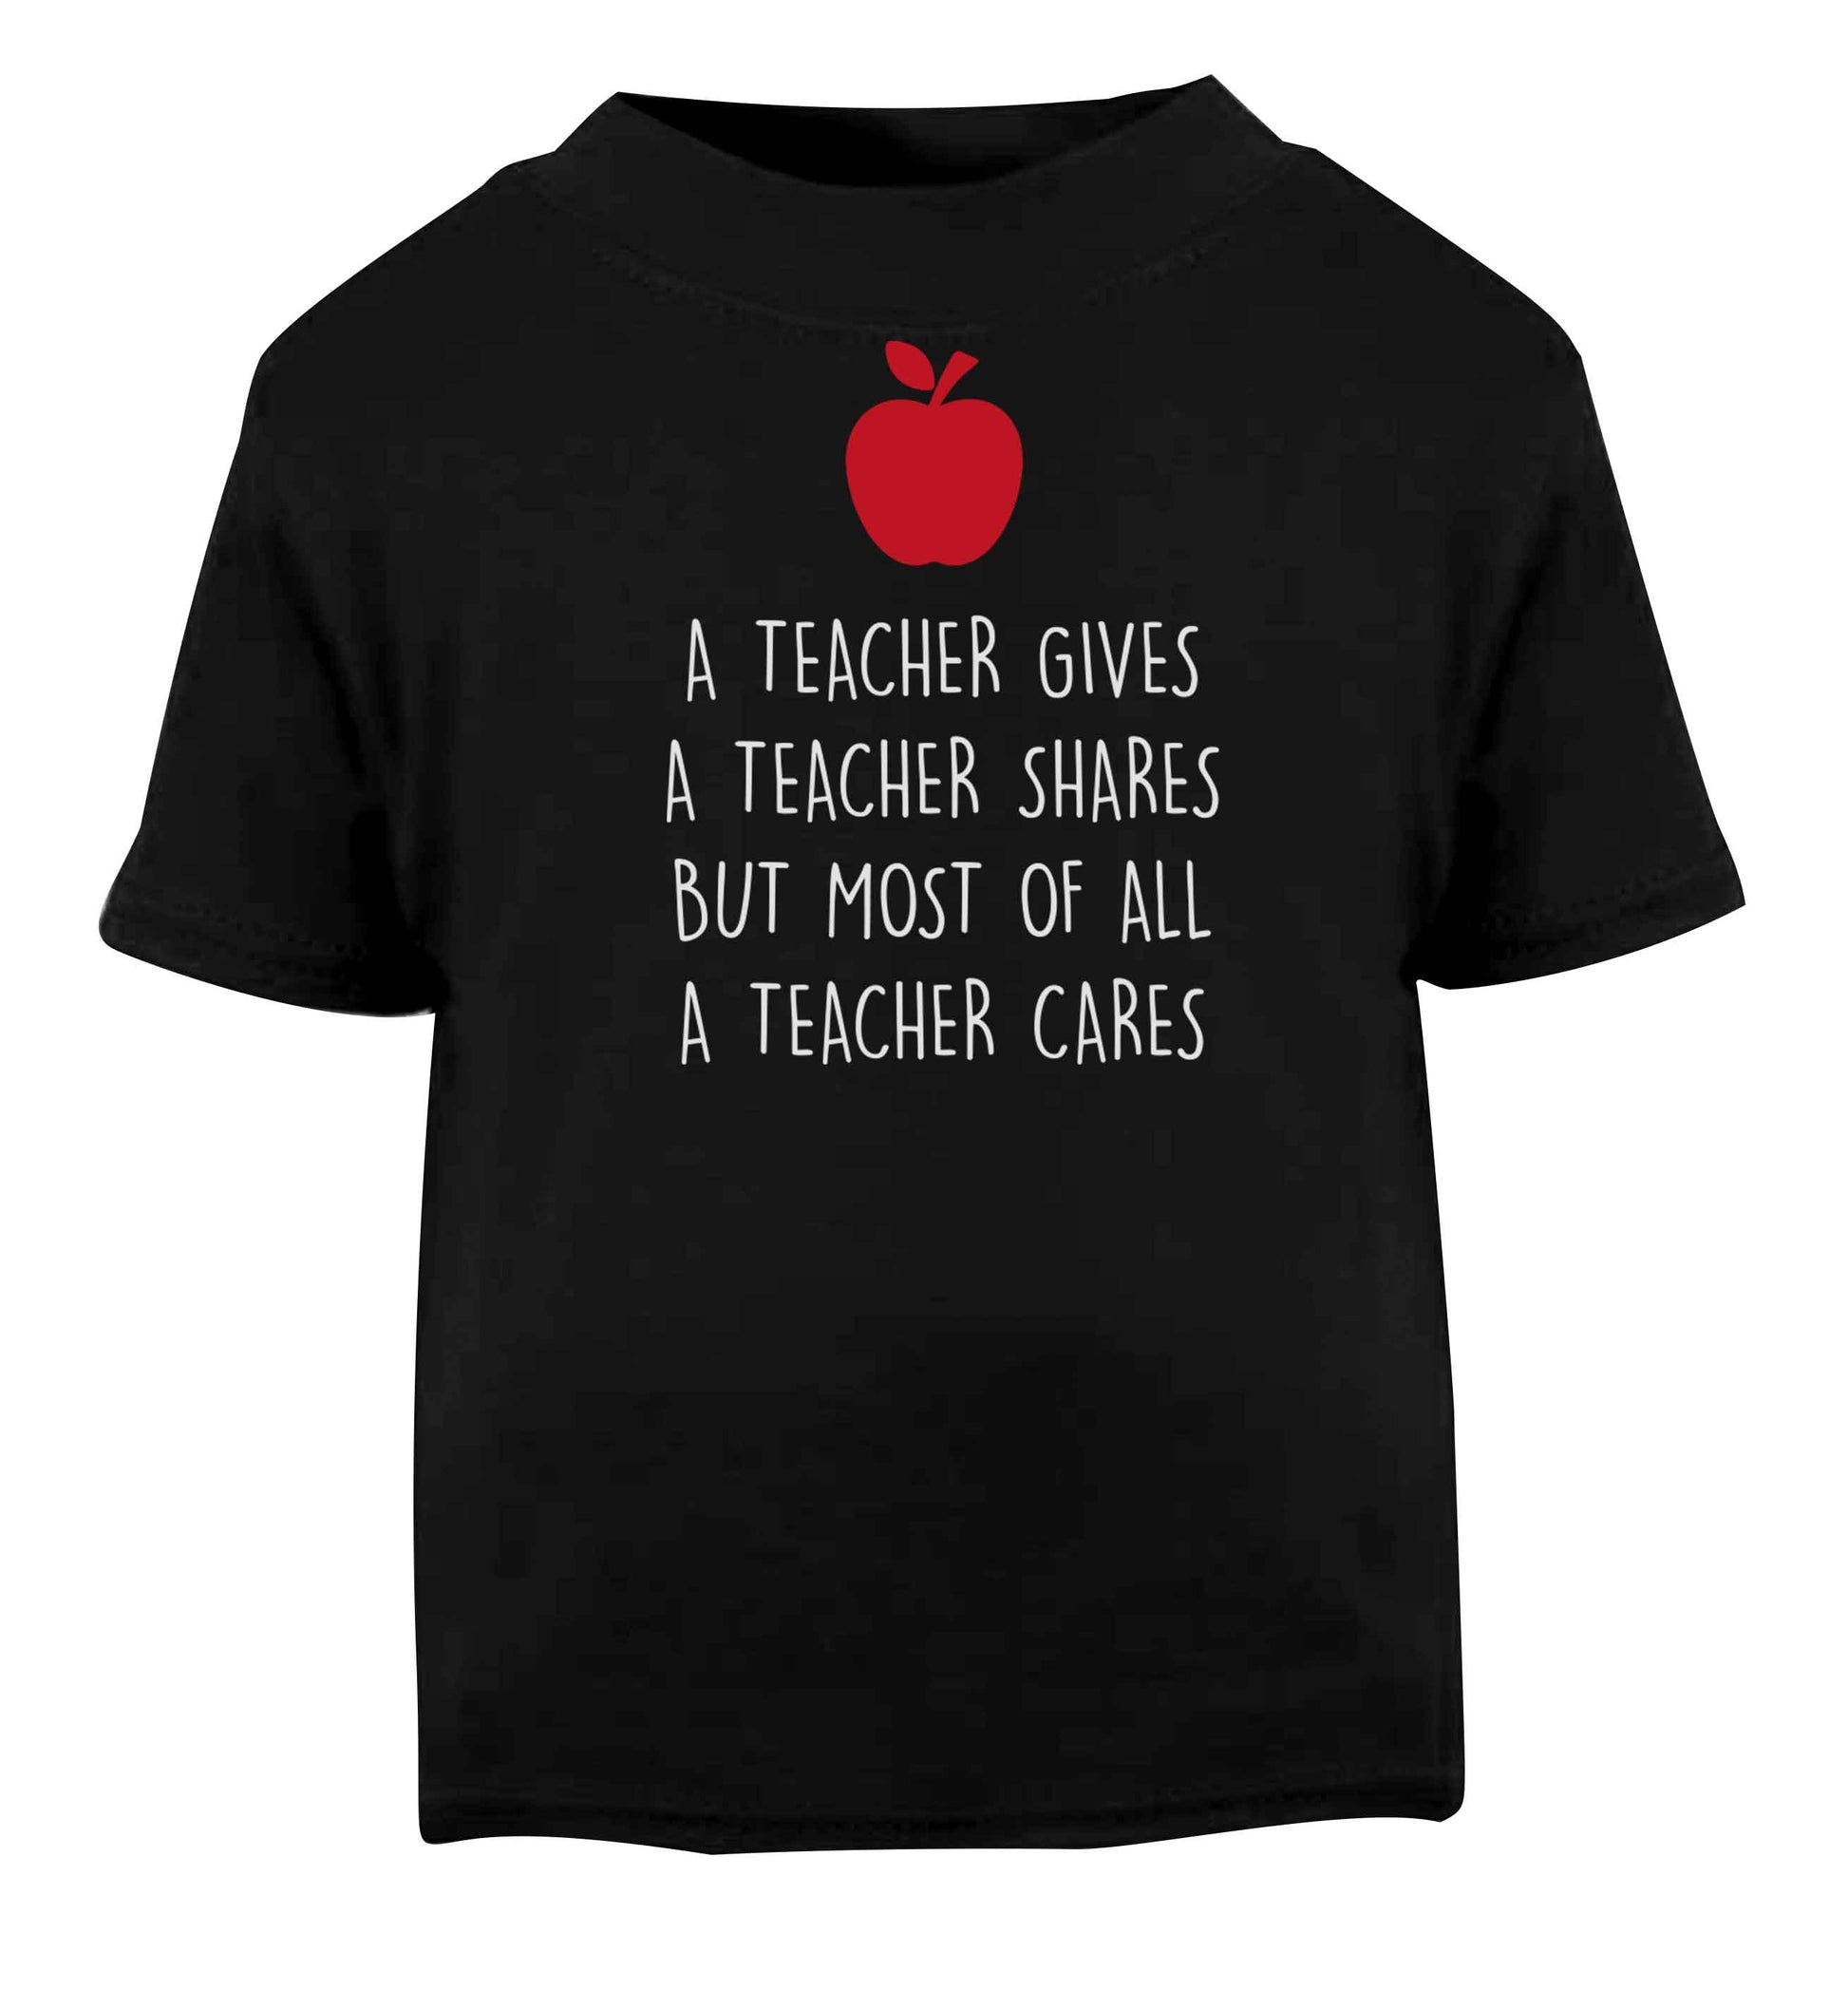 A teacher gives a teacher shares but most of all a teacher cares Black baby toddler Tshirt 2 years